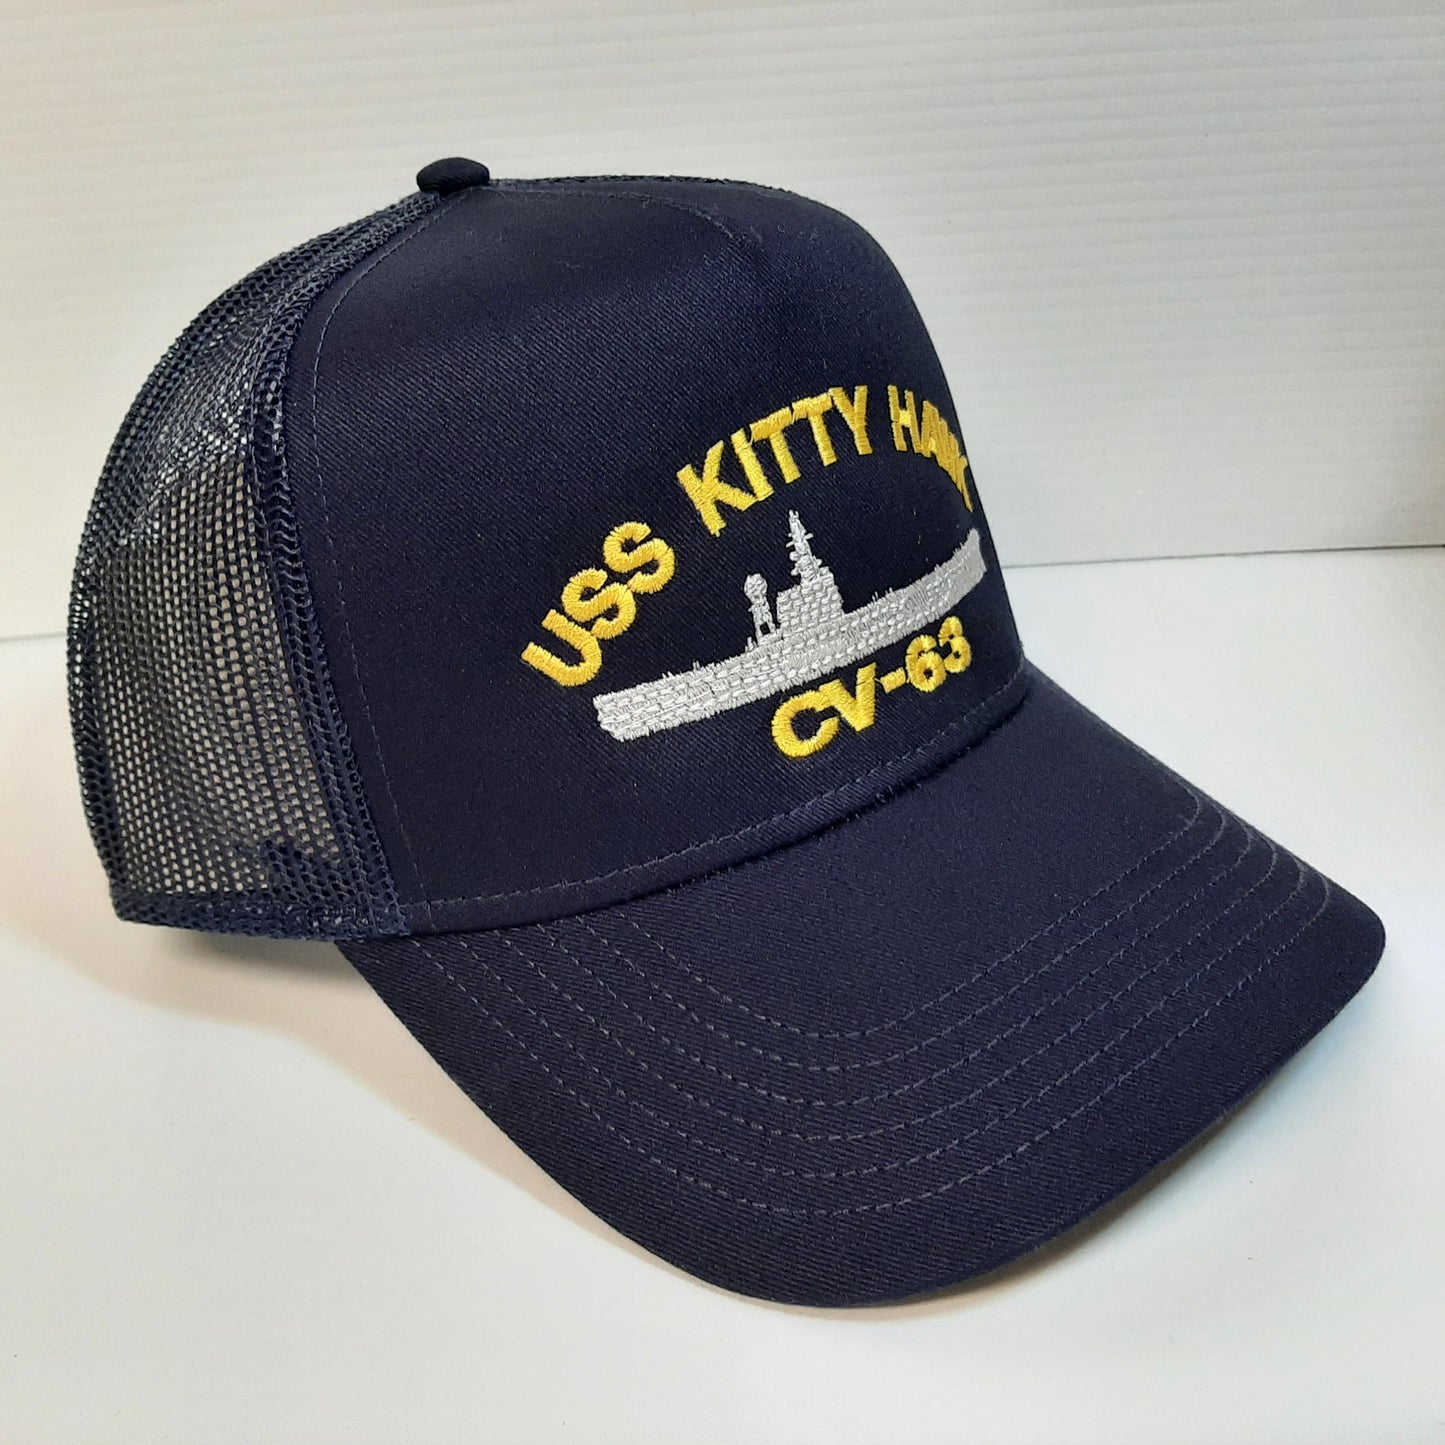 US Navy USS Kitty Hawk CV-63 Hat Embroidered Baseball Cap Mesh Snapback